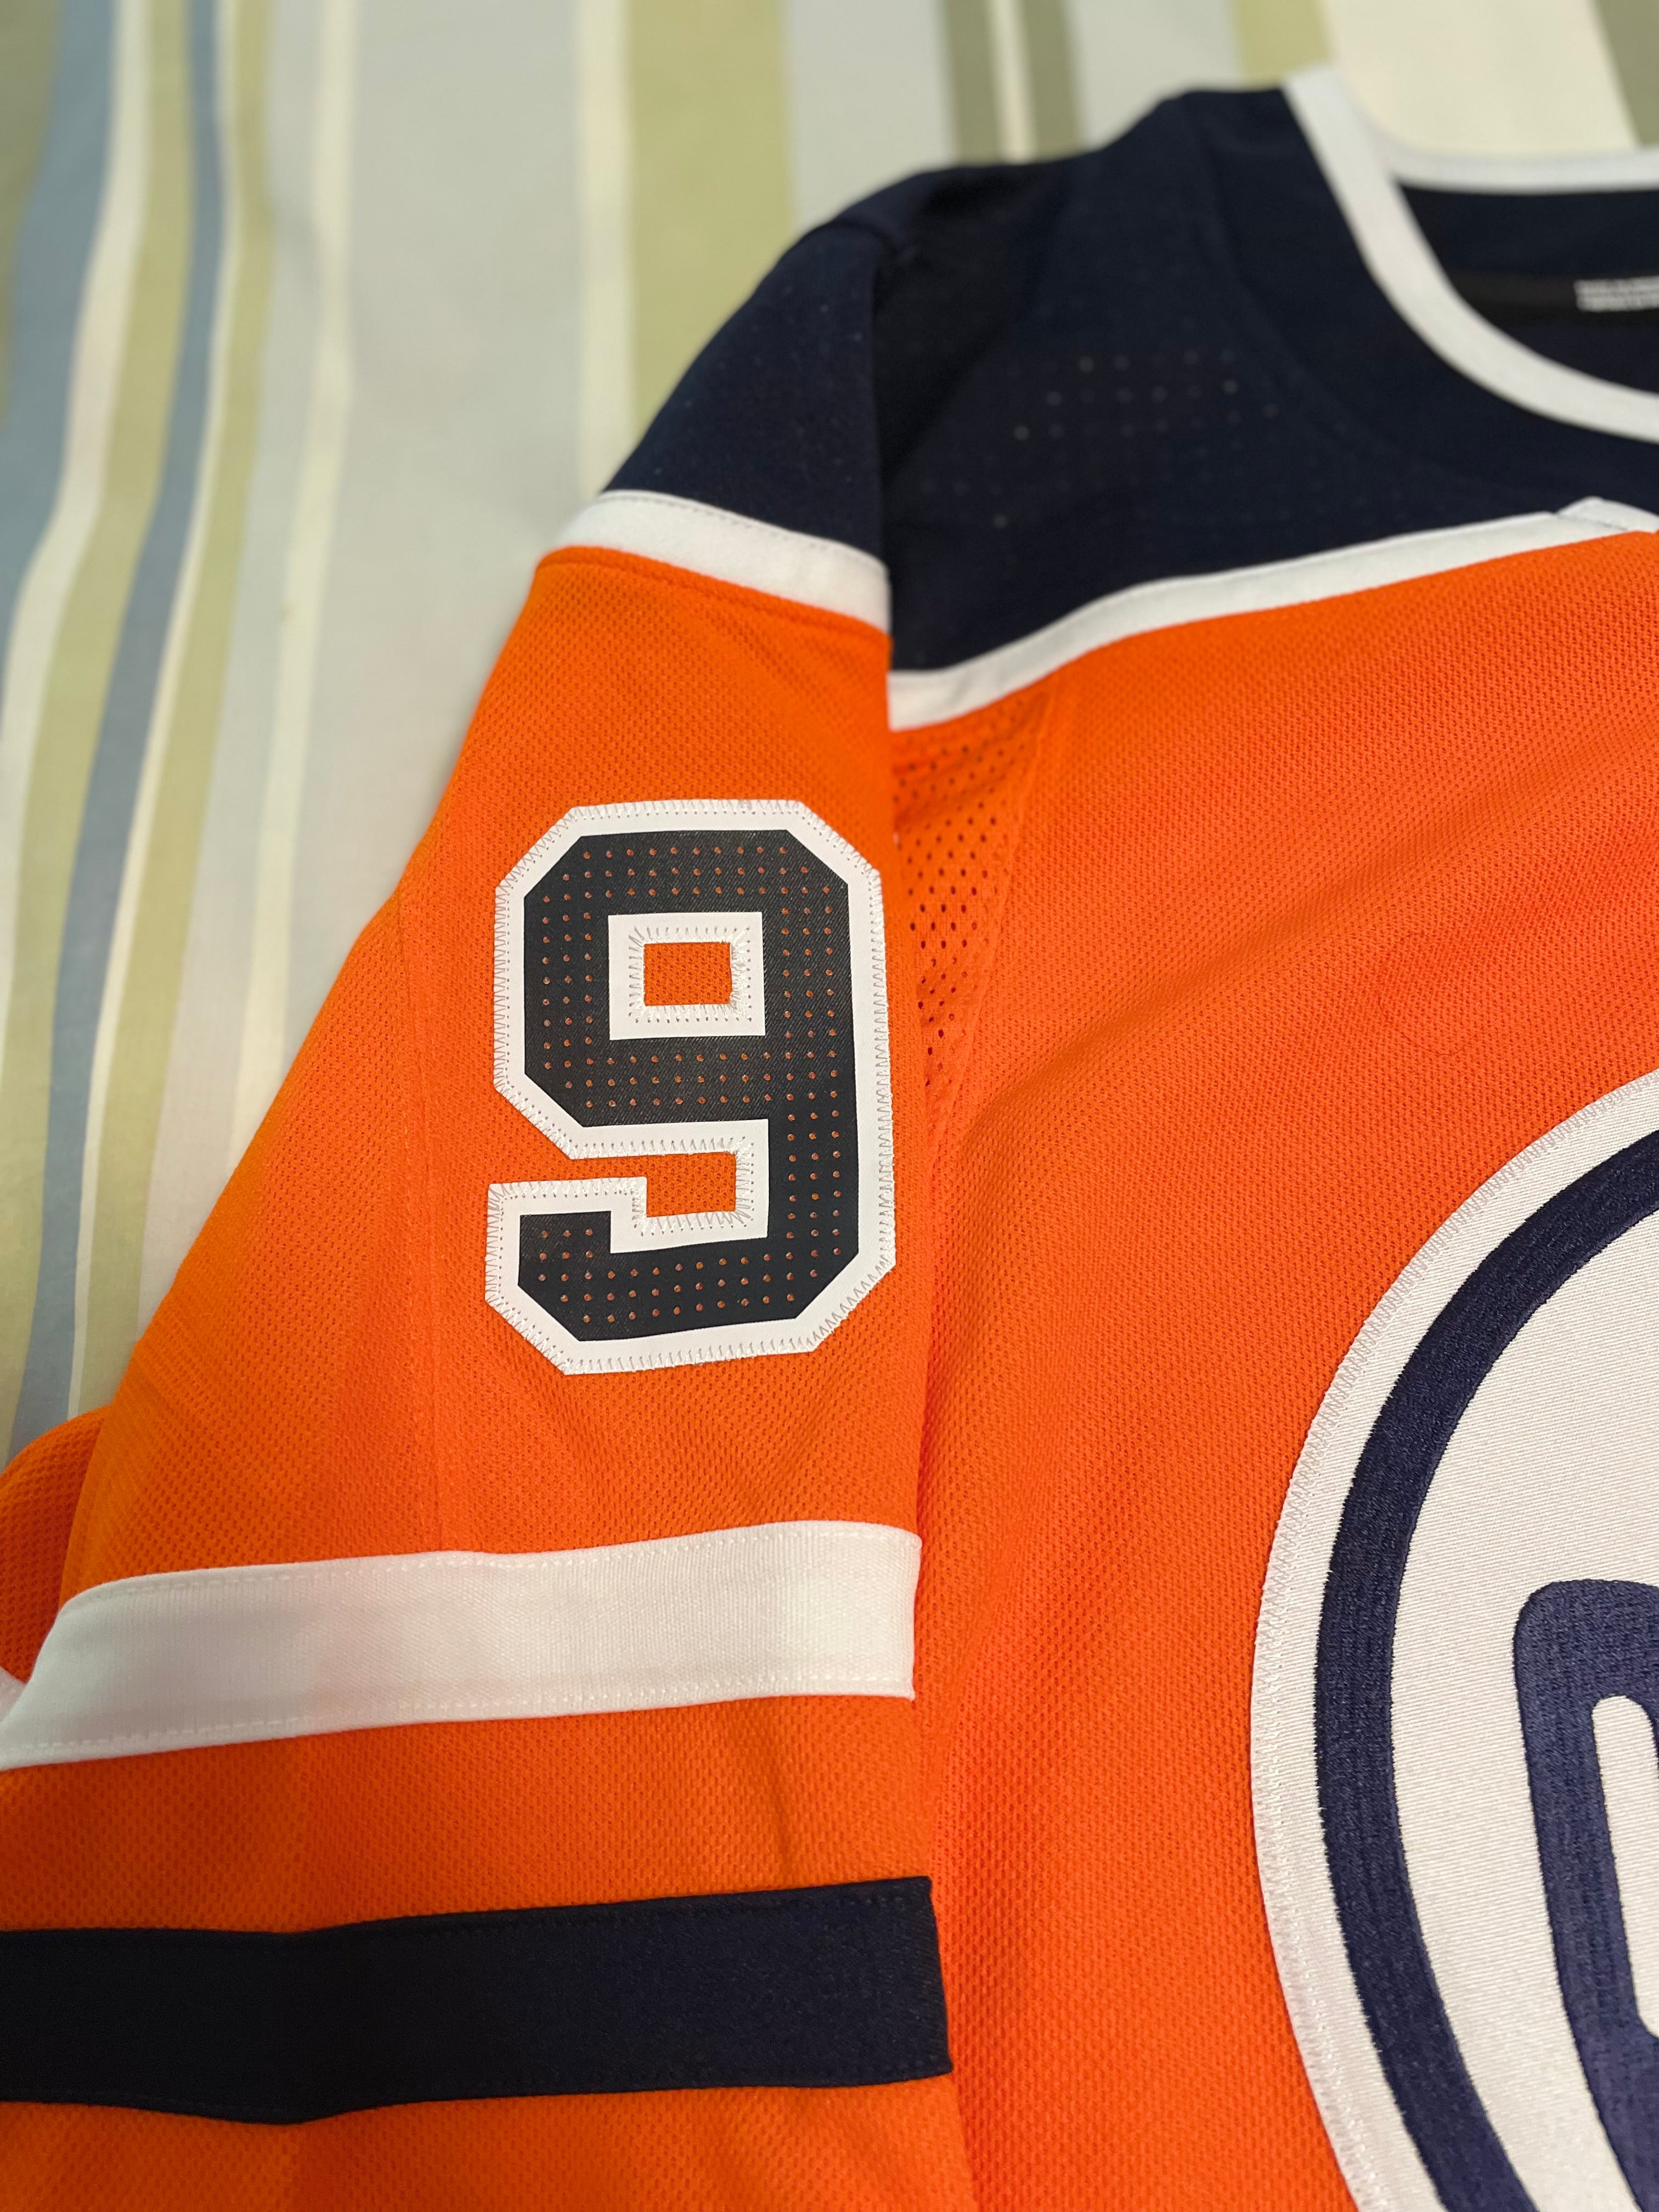 Edmonton Oilers Connor McDavid Adidas NHL Hockey Jersey Size 54